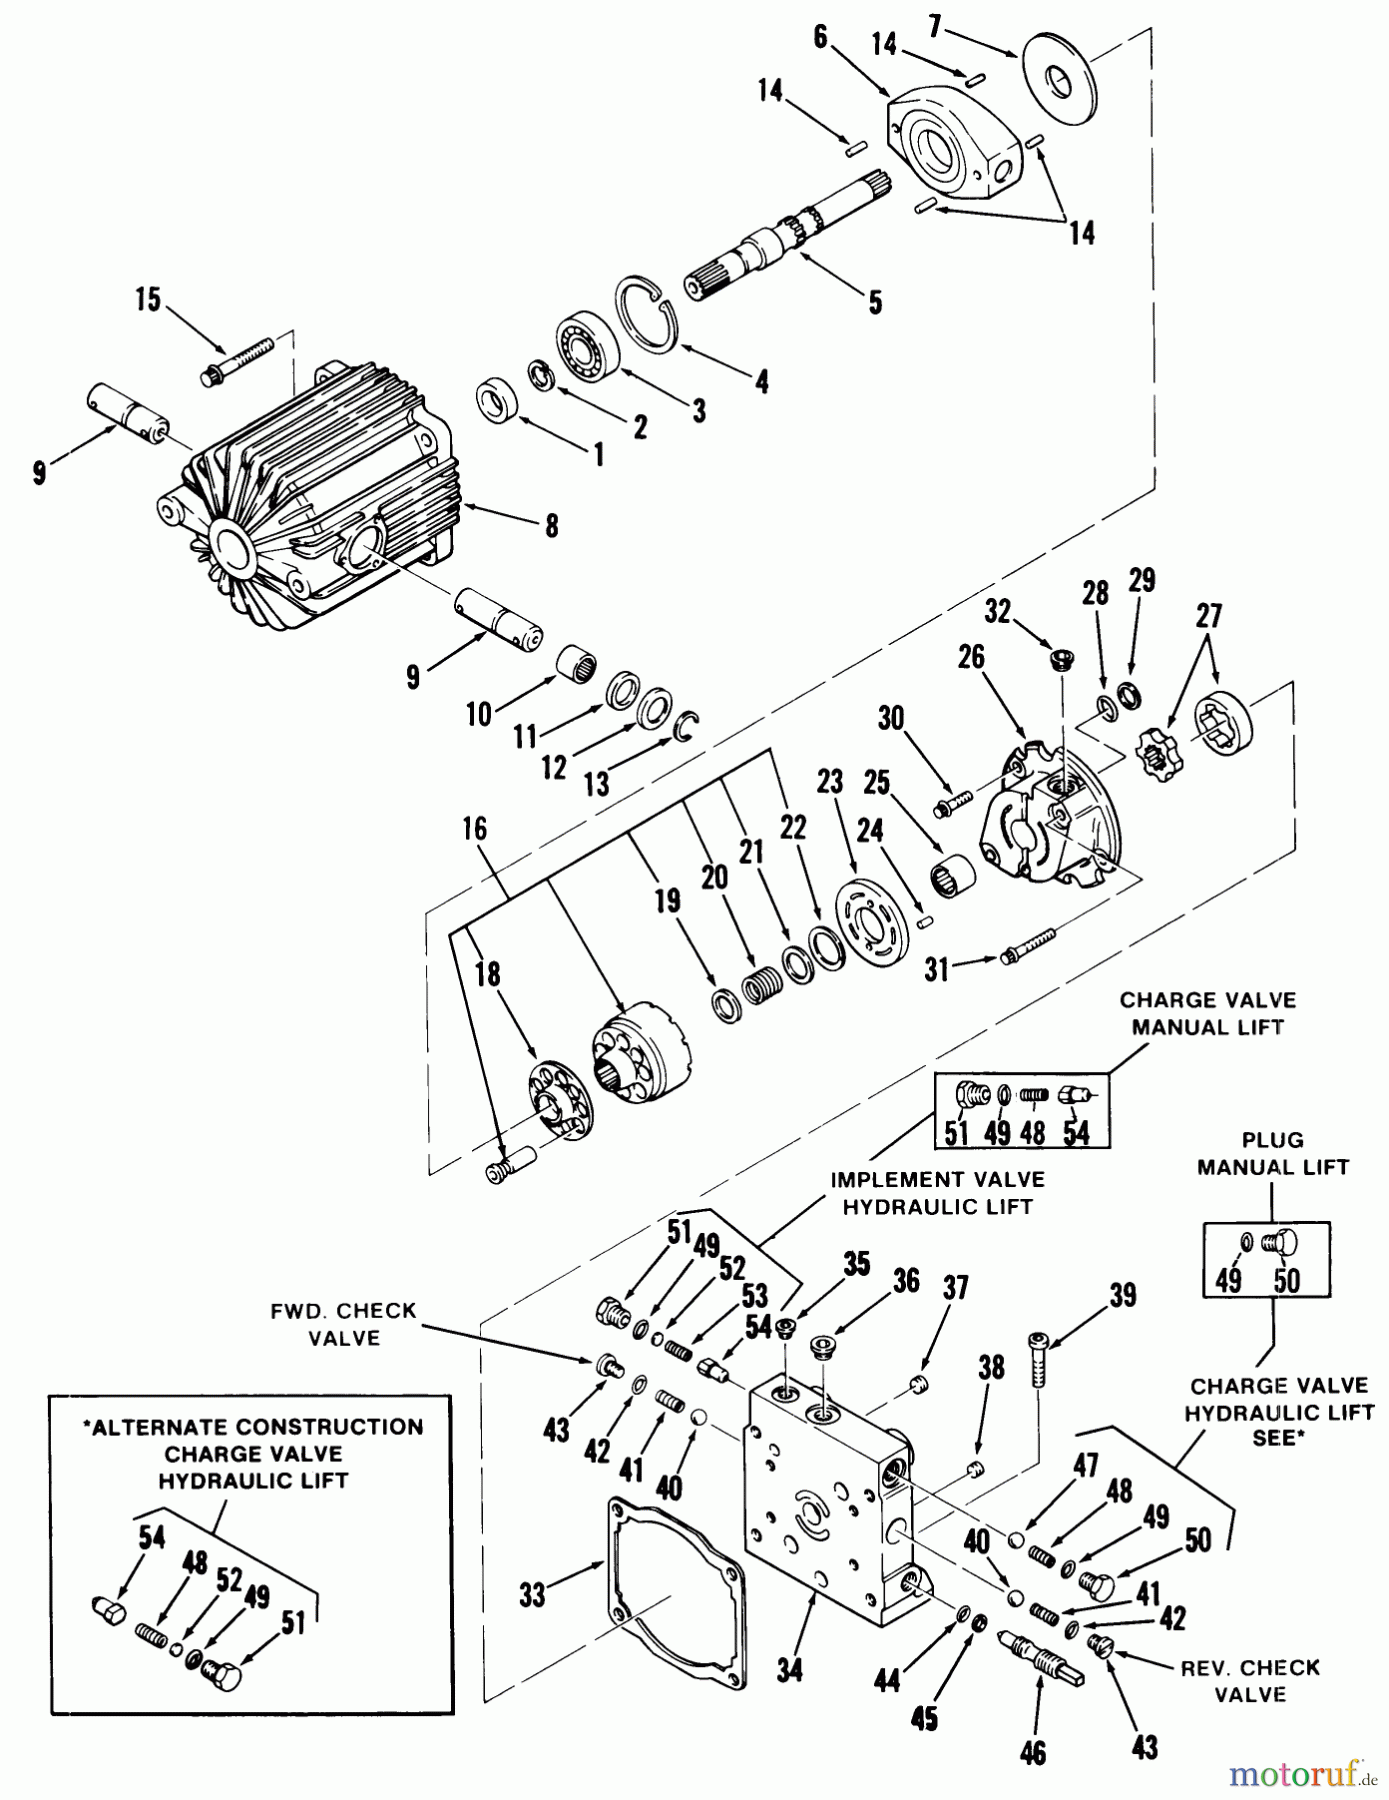  Toro Neu Mowers, Lawn & Garden Tractor Seite 1 01-17KS02 (C-175) - Toro C-175 Twin Automatic Tractor, 1980 AUTOMATIC TRANSMISSION #2